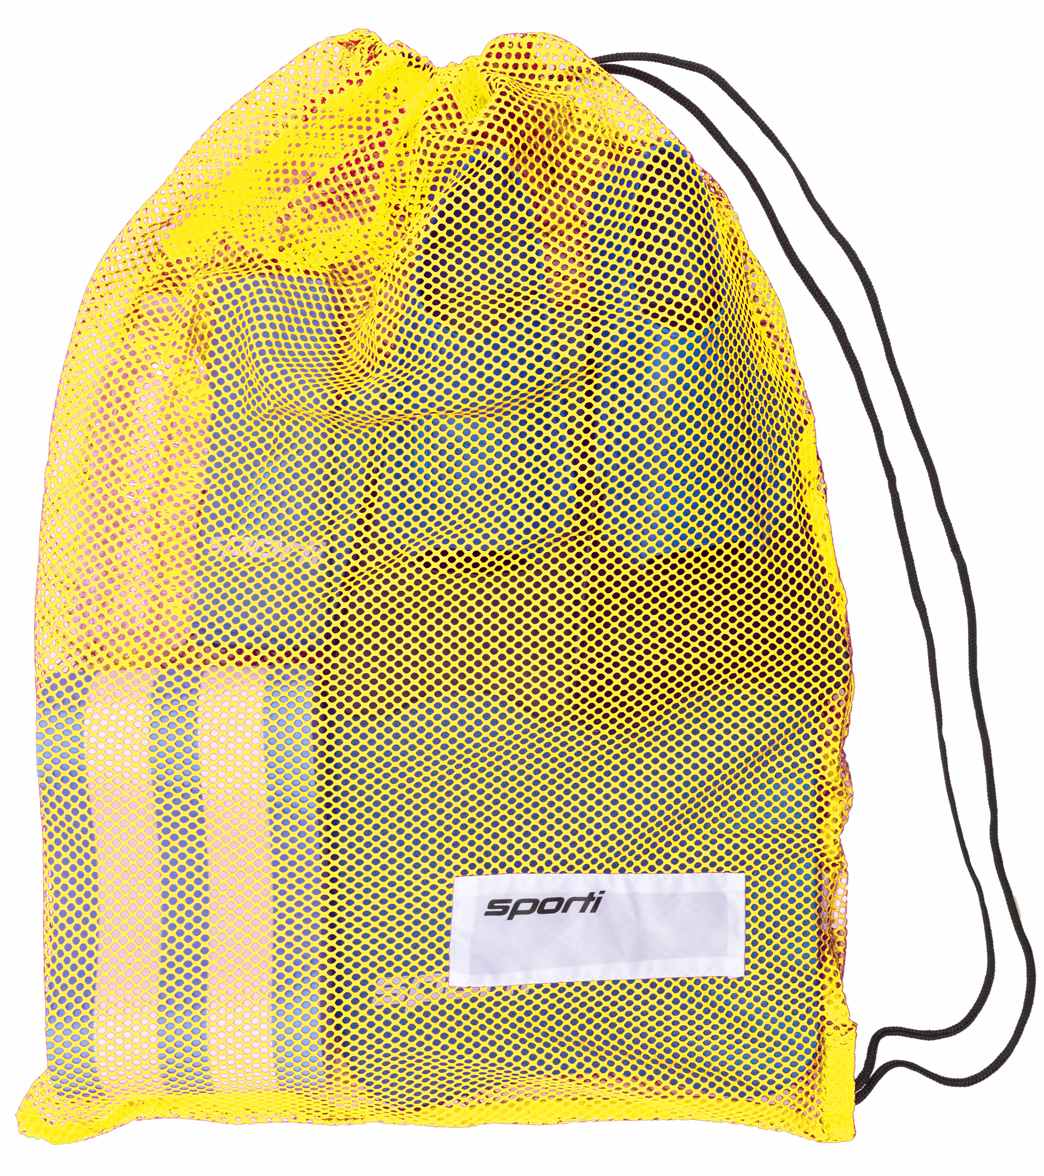 Sporti Mesh Bag - Yellow Polyester - Swimoutlet.com